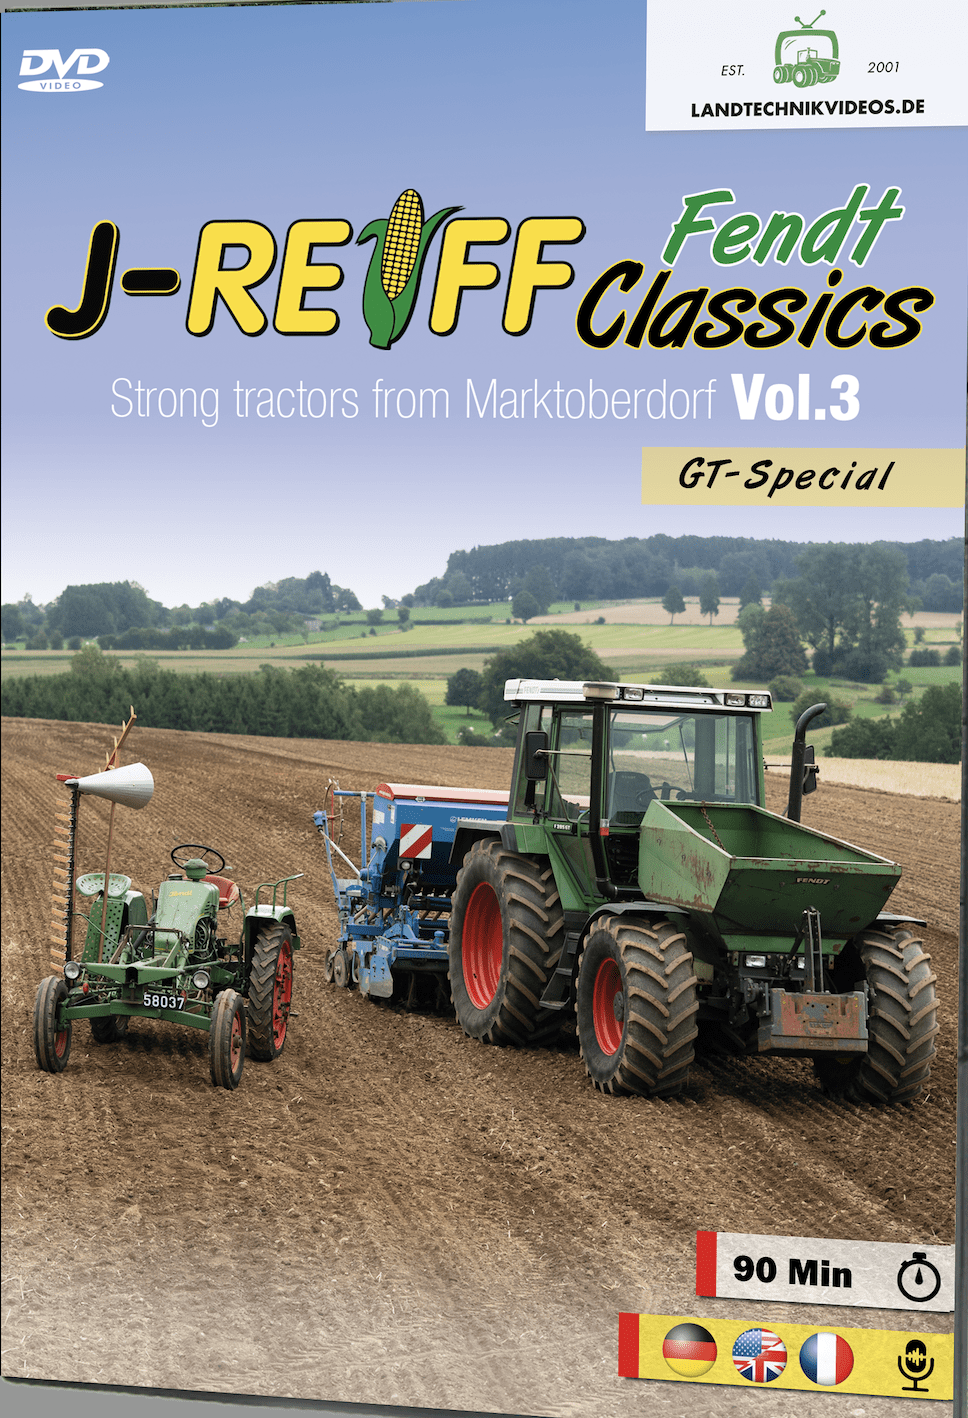 J-Reiff Fendt Classics Volume 3 – Tool Carrier Special